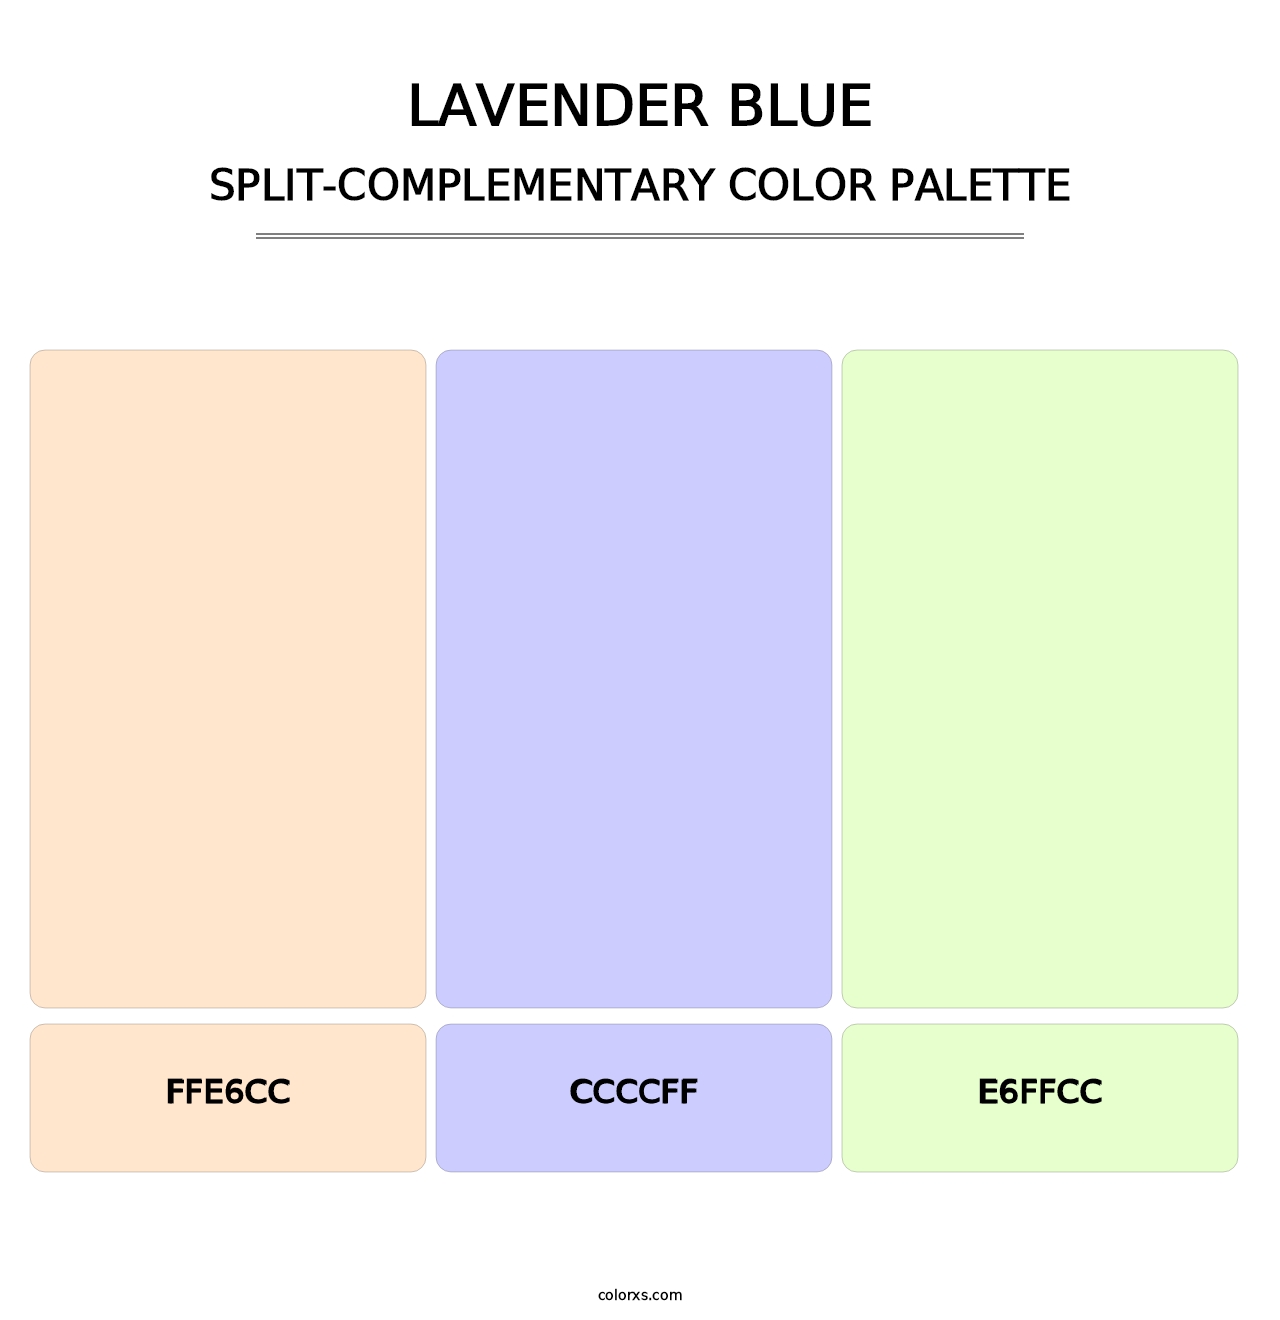 Lavender Blue - Split-Complementary Color Palette